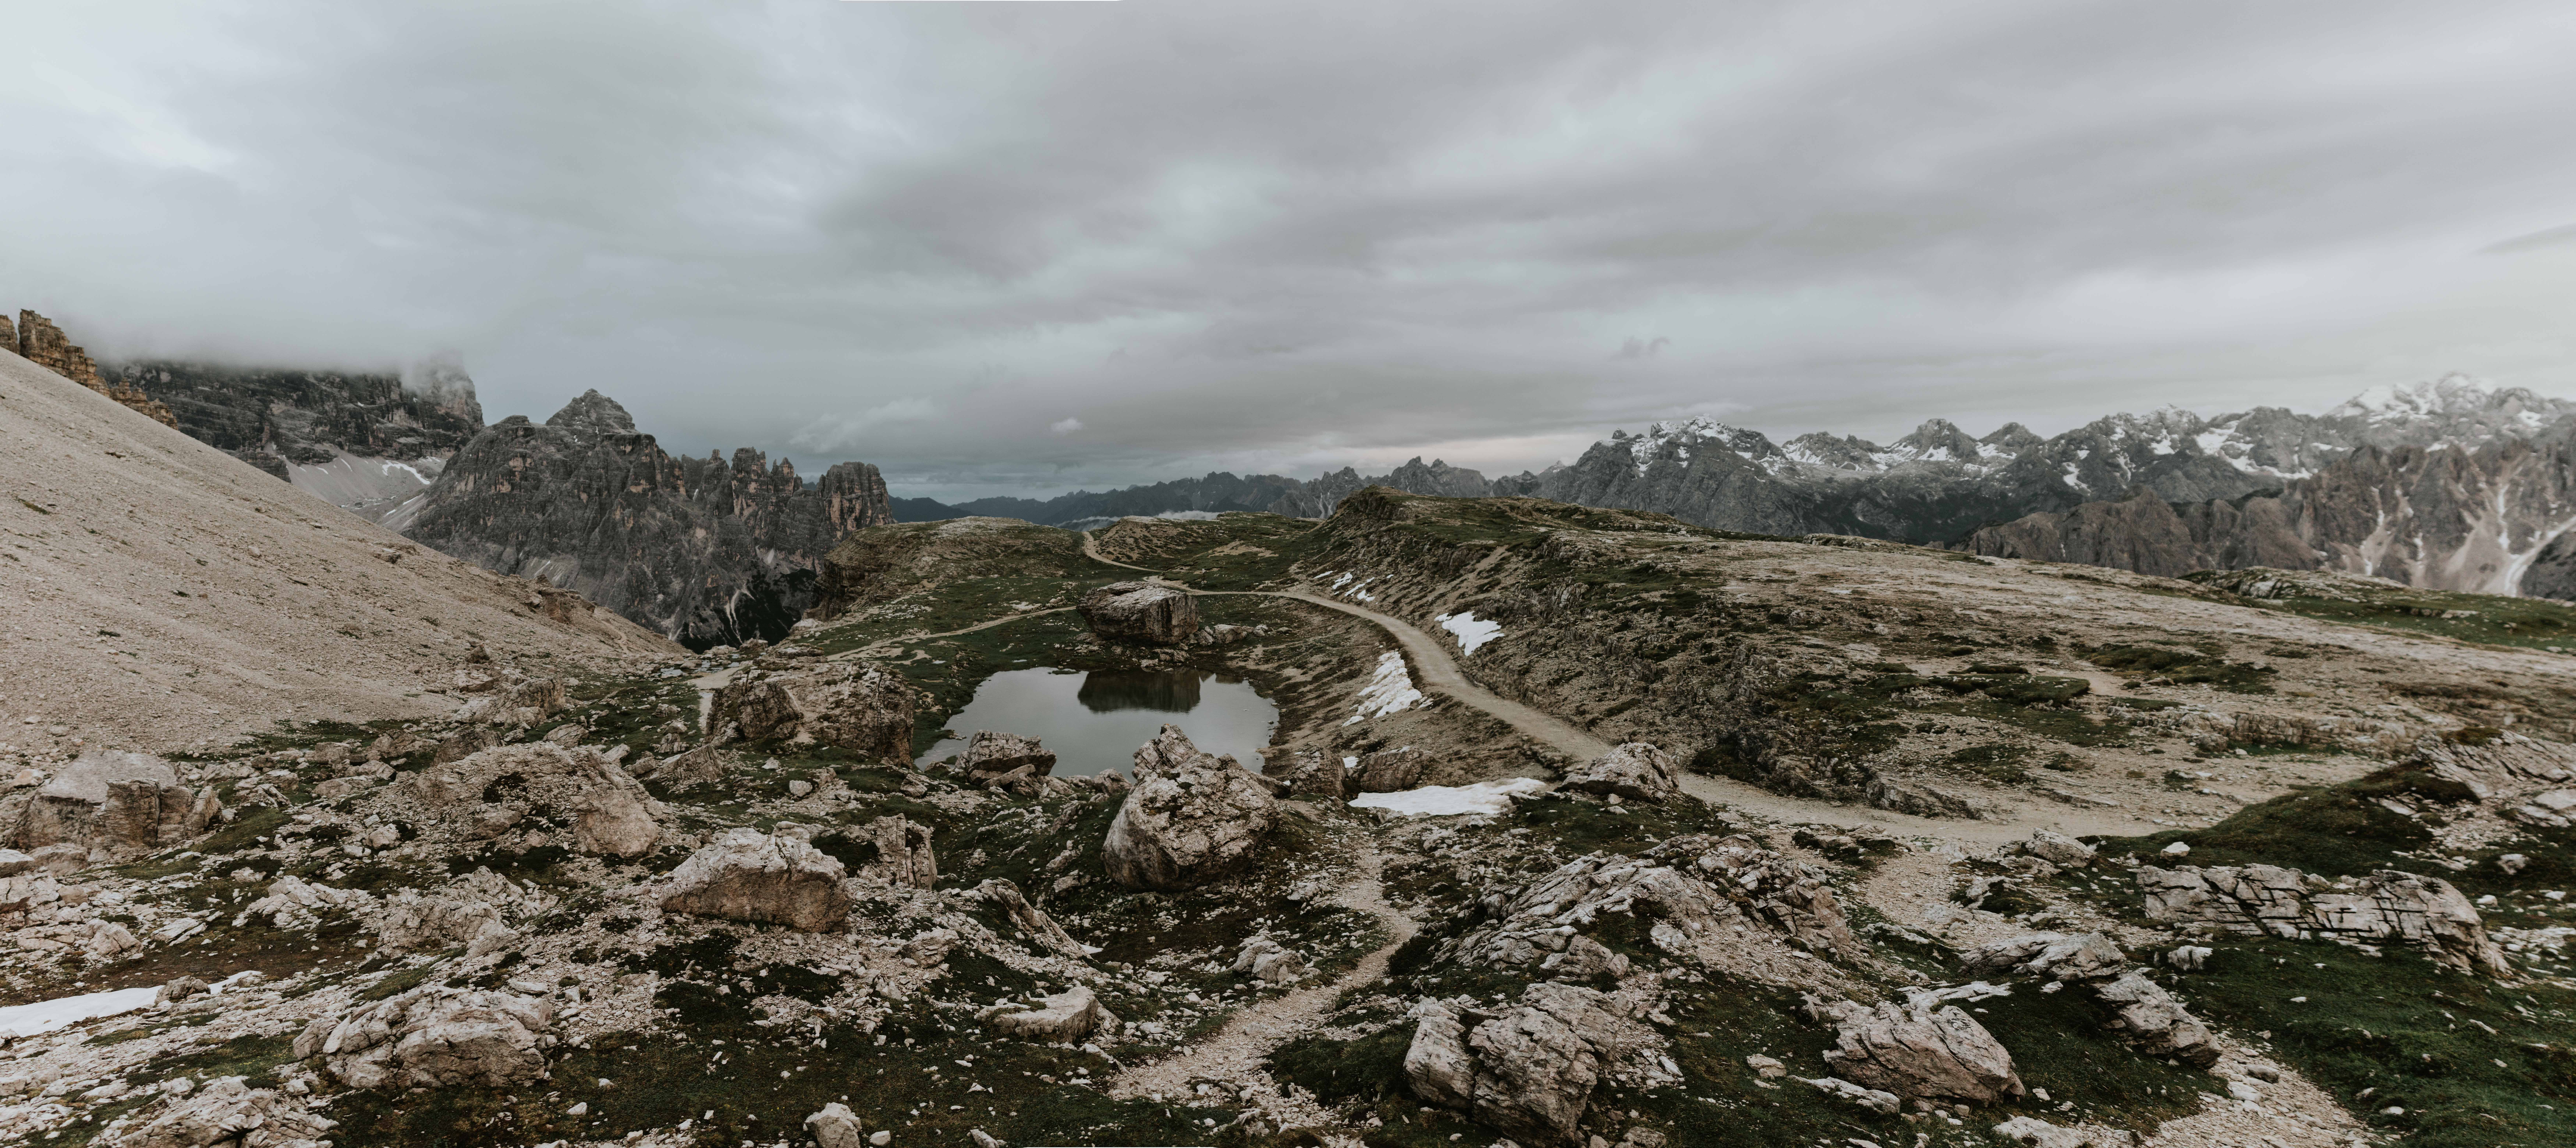 Dolomites landscape photo showing the peaks of the Tre Cime National Park